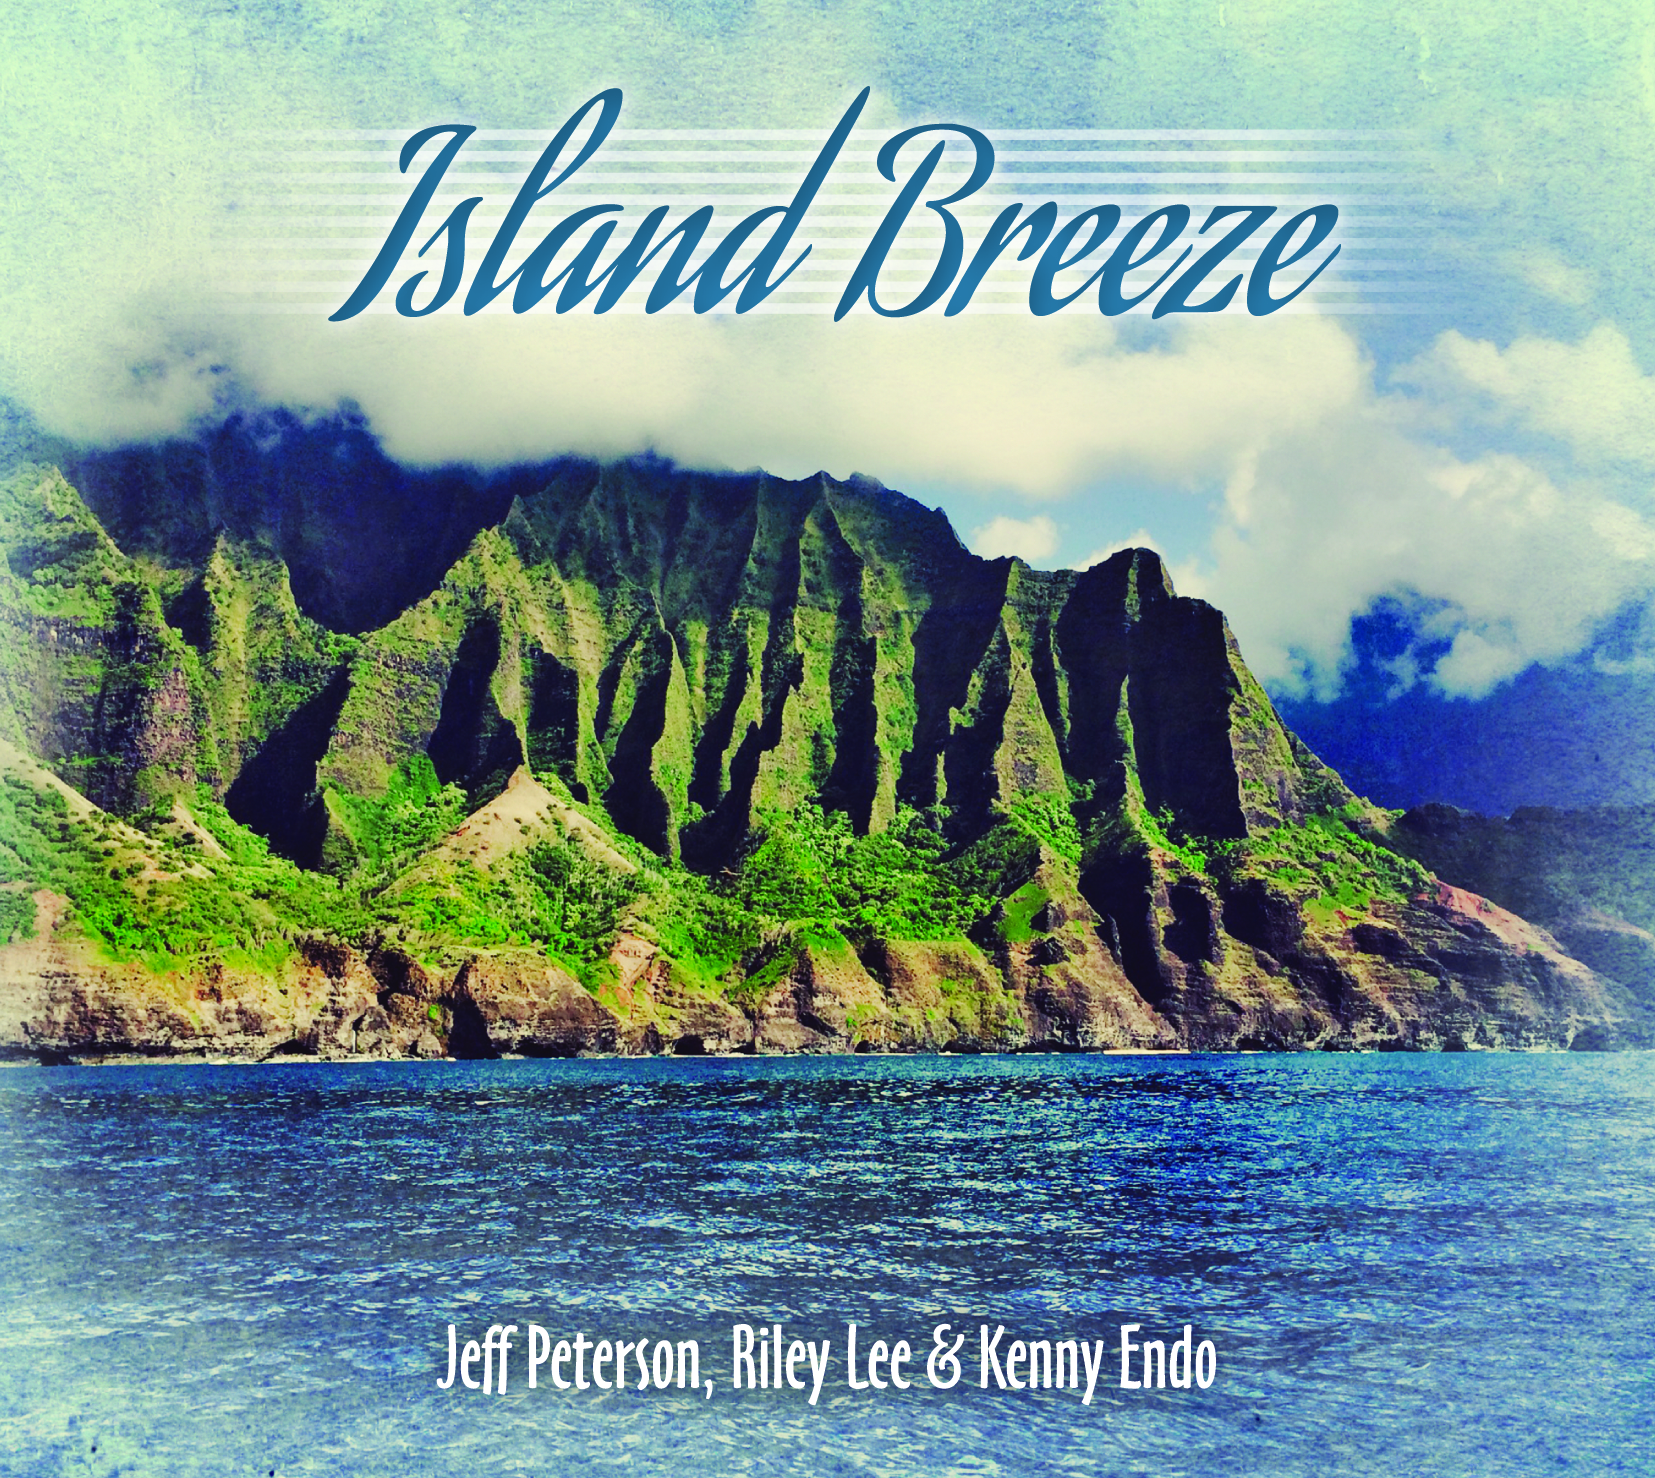 https://jeffpetersonguitar.com/wp-content/uploads/2014/08/Island-Breeze-Cover-Art-JPEG.jpg